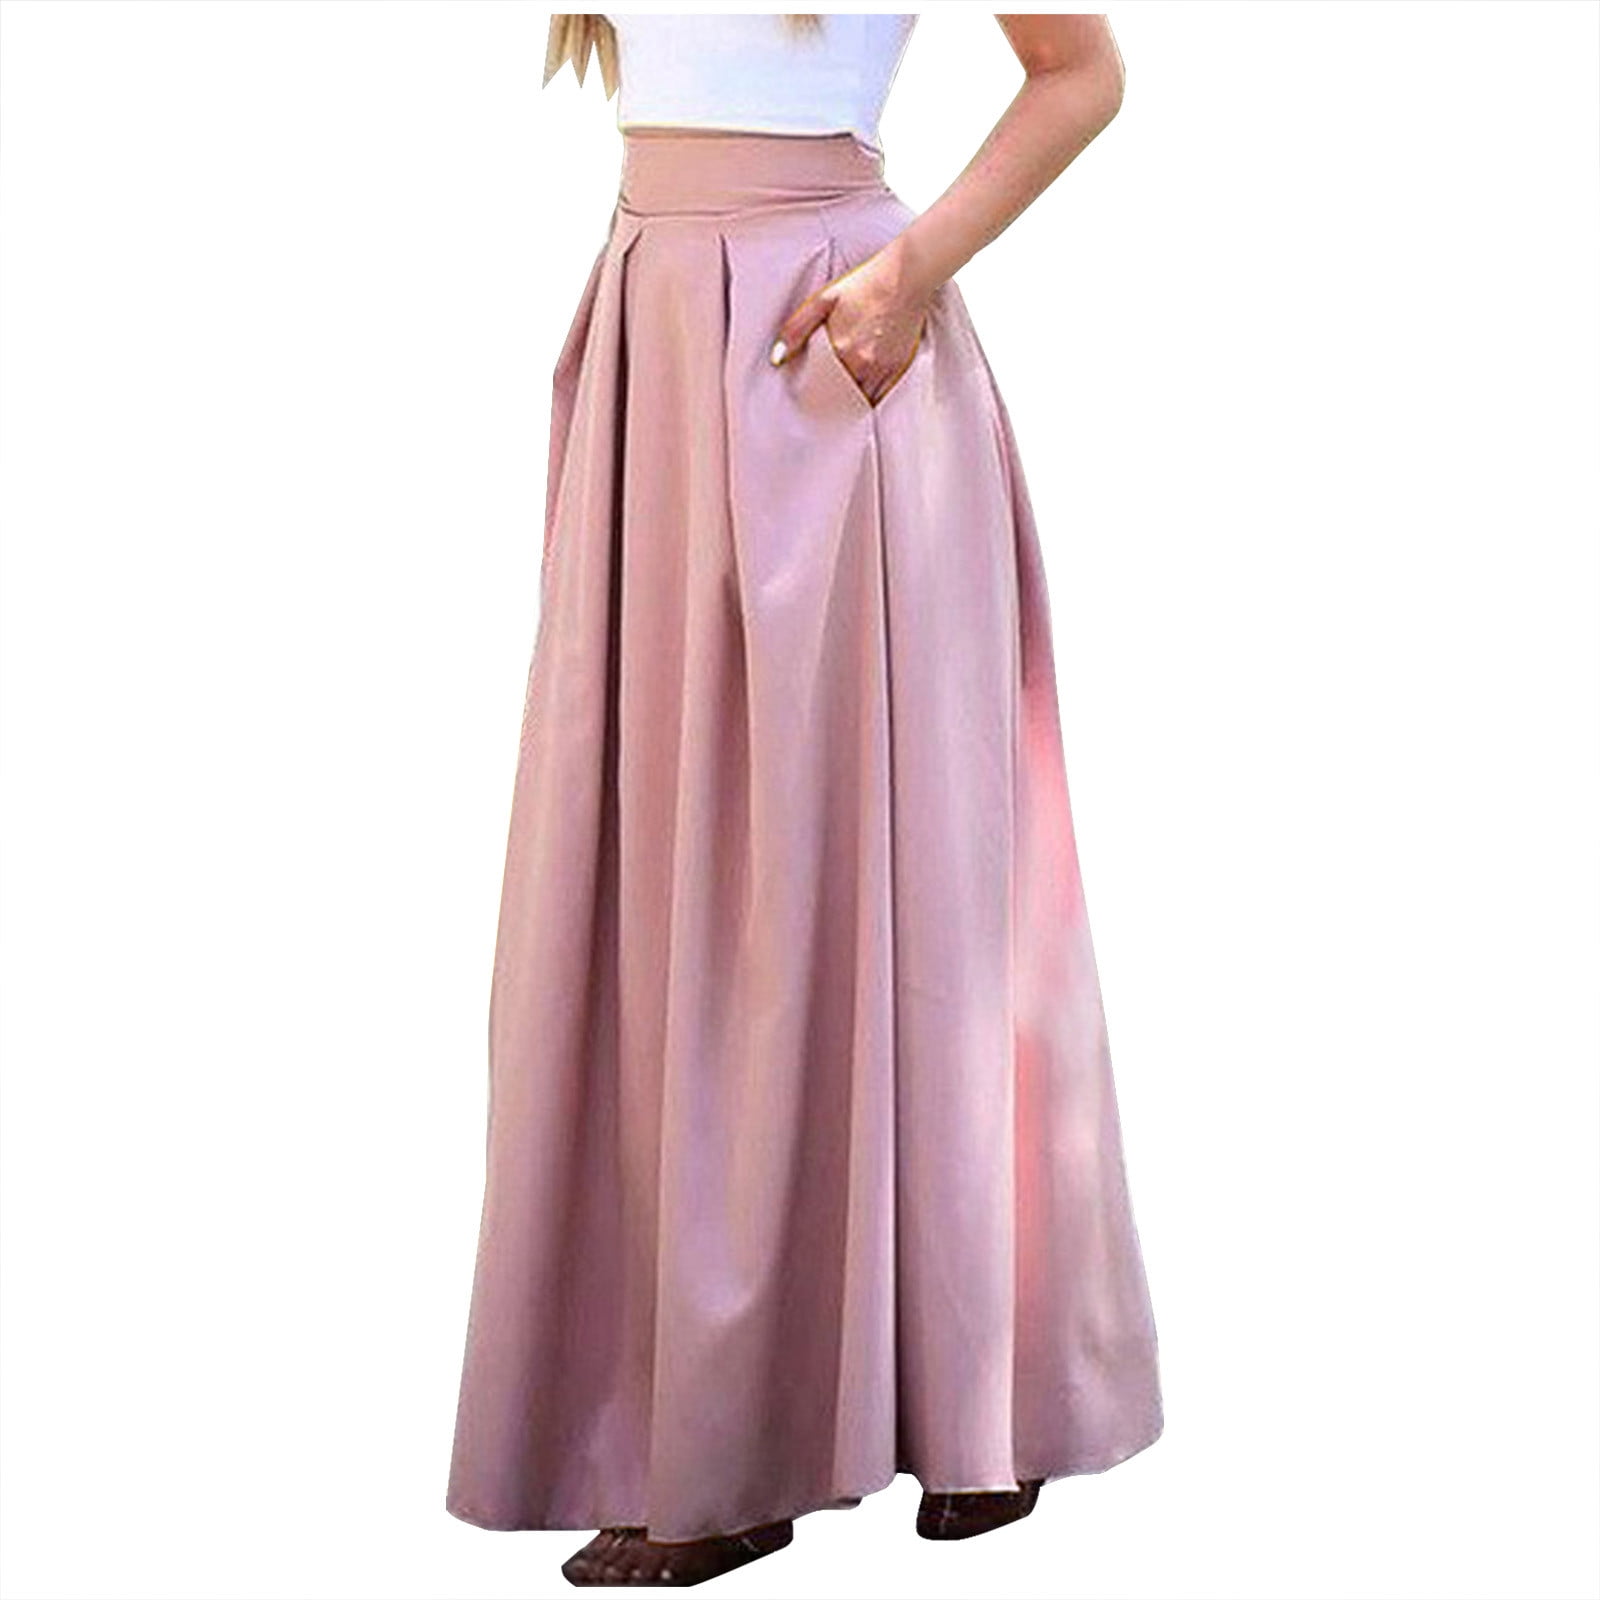 Skirts for Women Solid Color Fashion Women Spring Summer Belt 